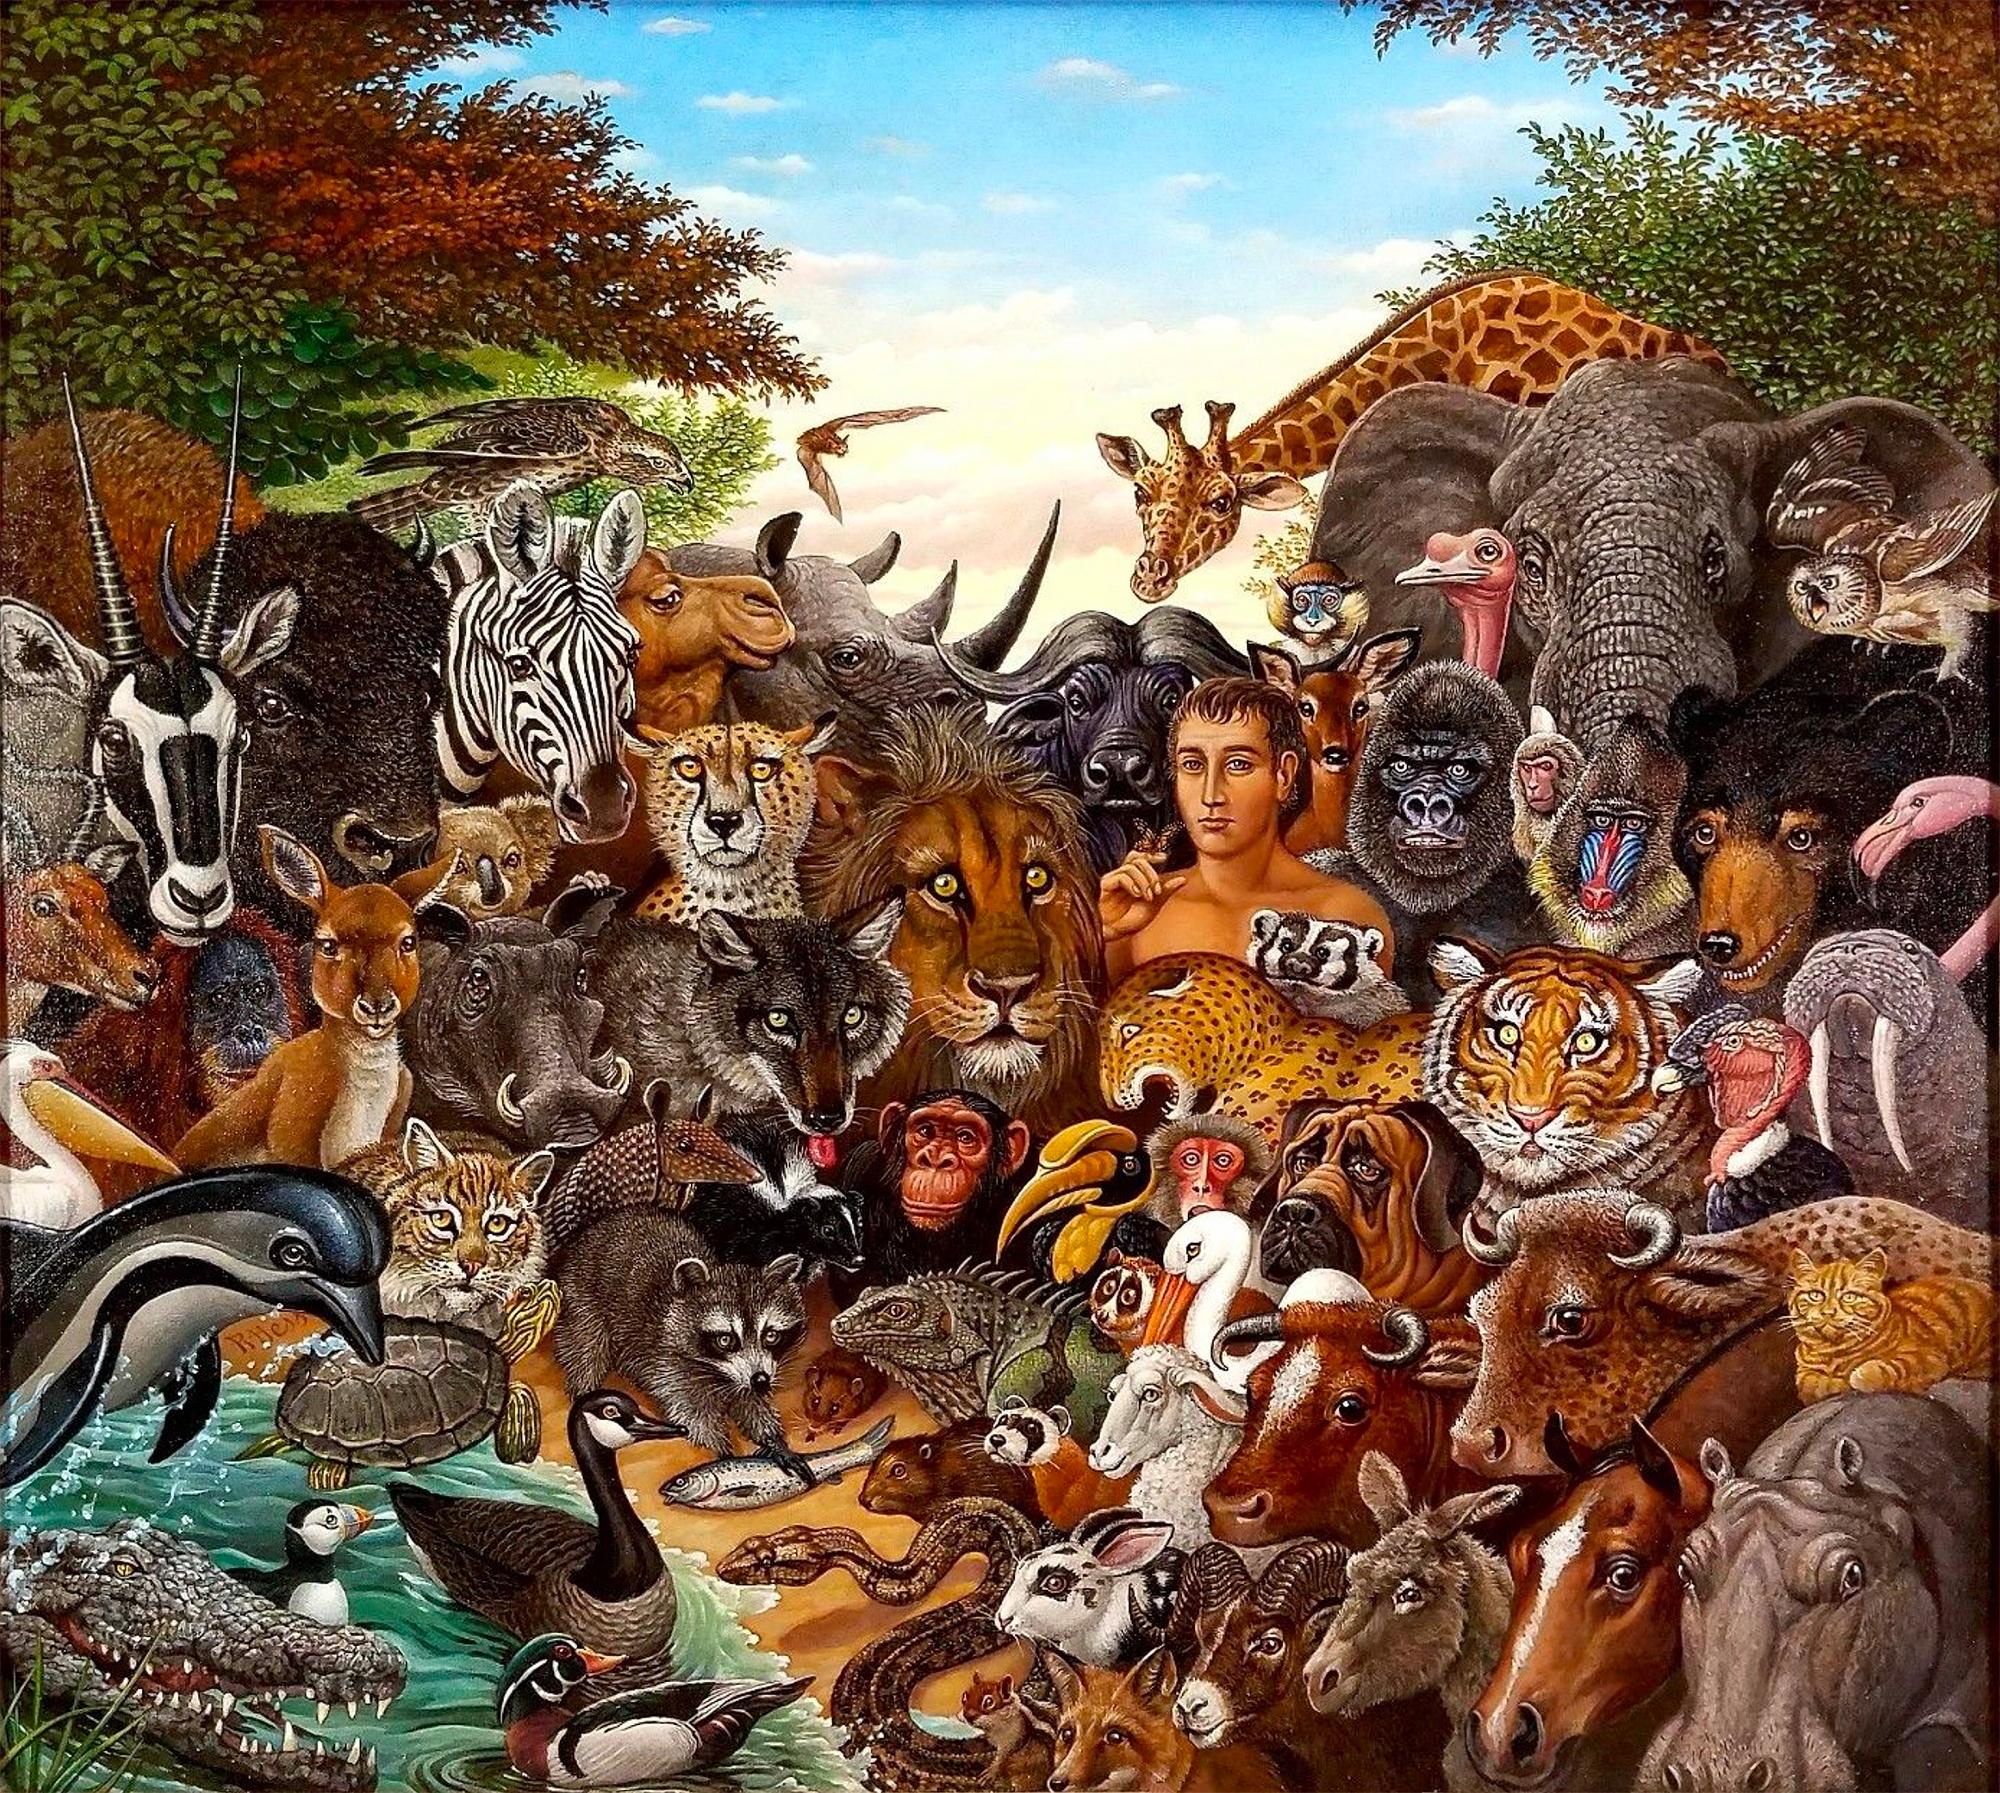 Portrait Painting Richard Hess - Kingdom Animal Kingdom, Zebra, Buffalo, Lion, Giraffe, Elephant, Monkey, Tiger,  Gorille